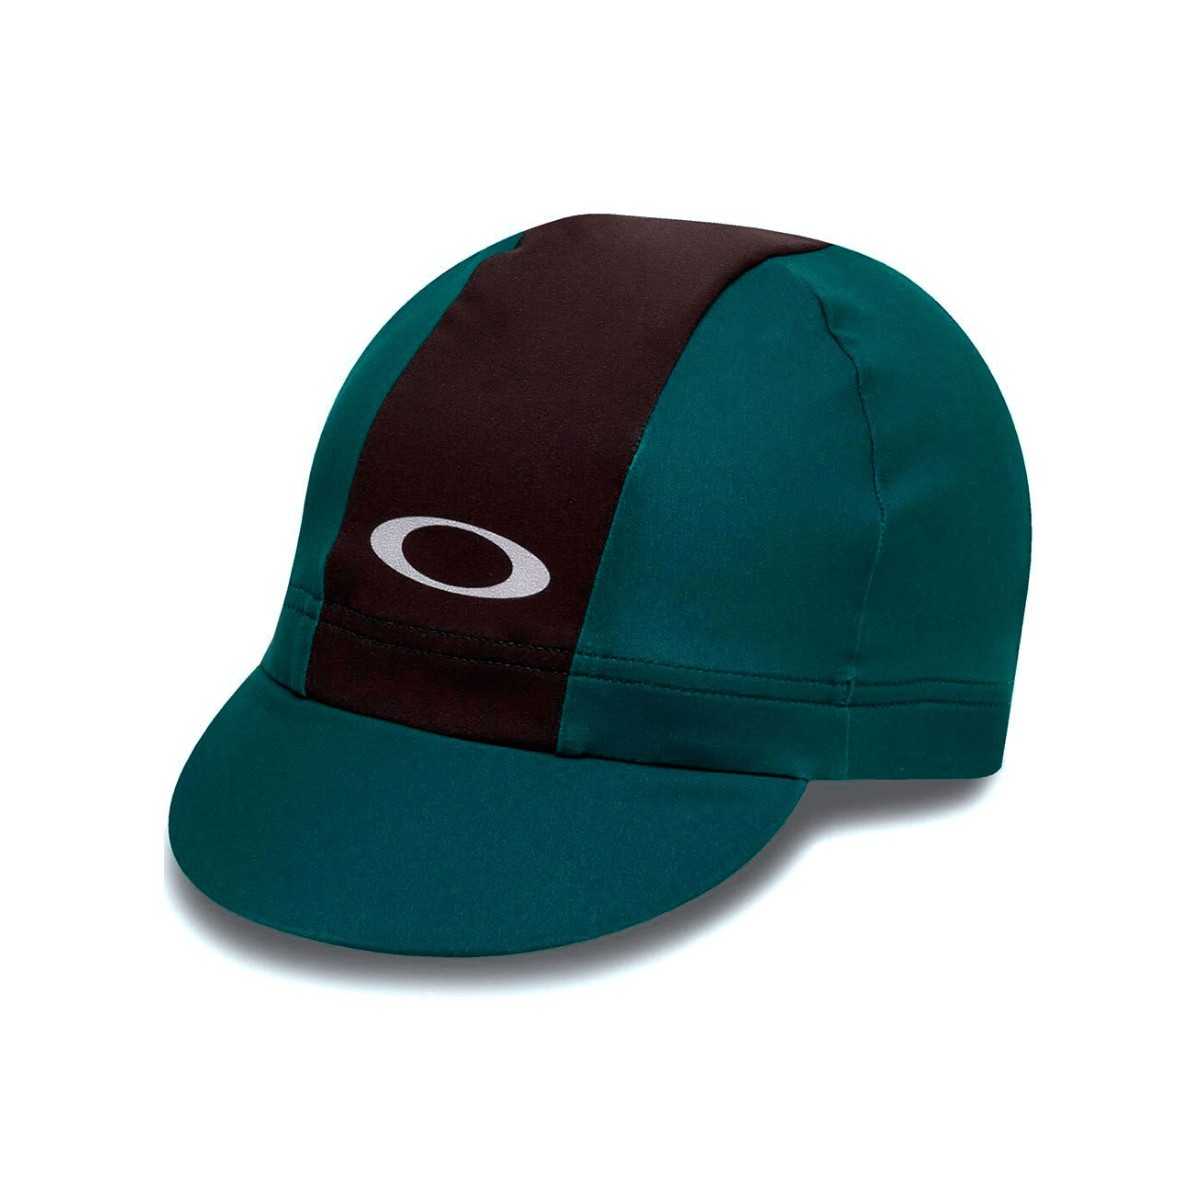 Oakley Cap 2.0 Grüne Kappe, Größe S/M